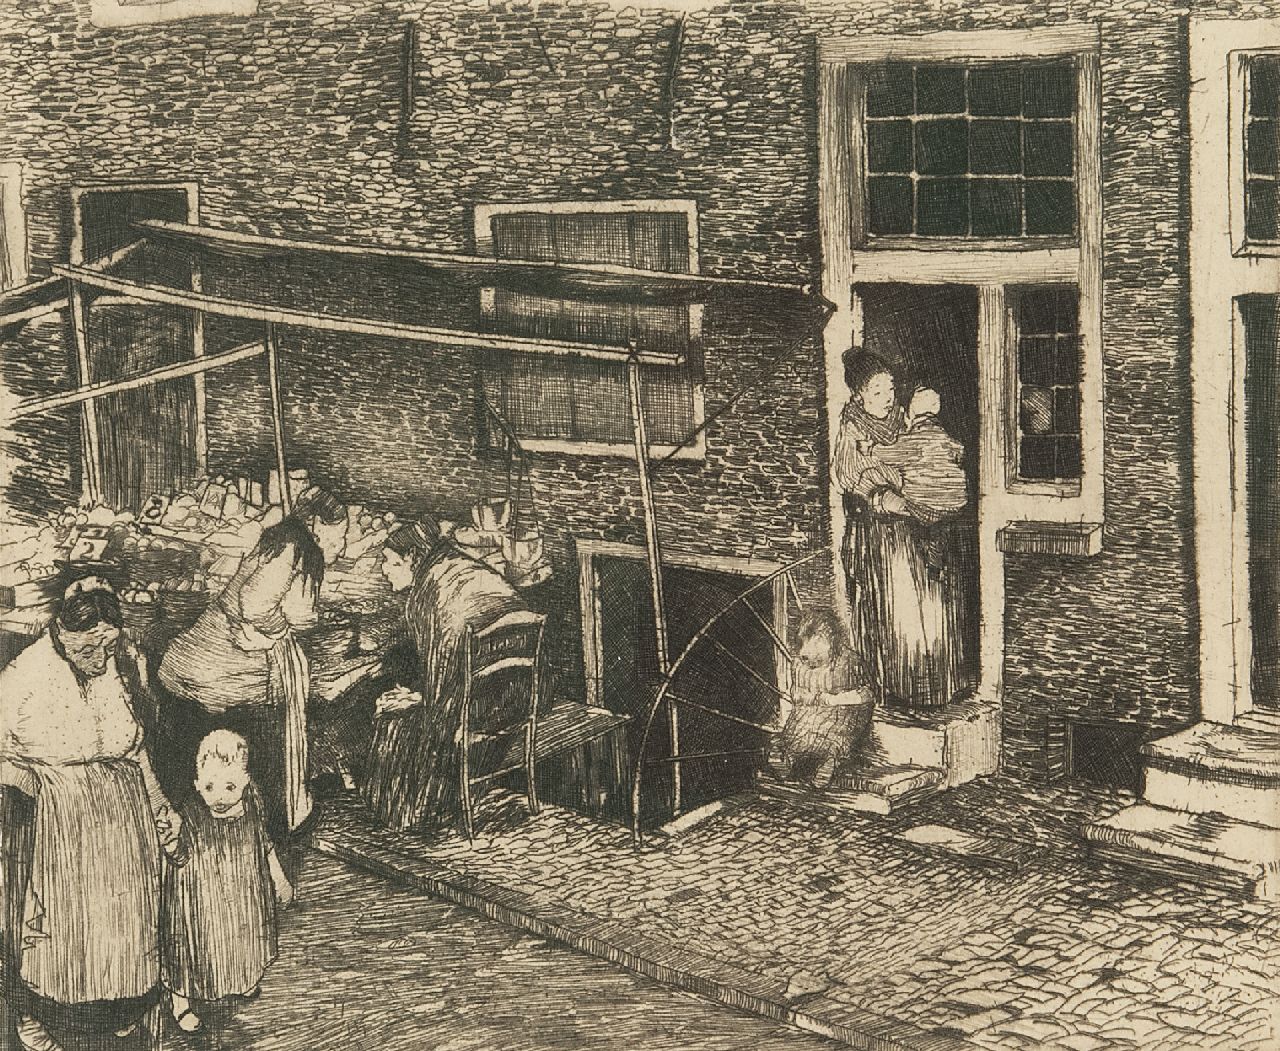 Hem P. van der | Pieter 'Piet' van der Hem | Prints and Multiples offered for sale | Alley in Amsterdam, etching 14.3 x 17.3 cm, signed l.r. and dated '30 jan. 1911'